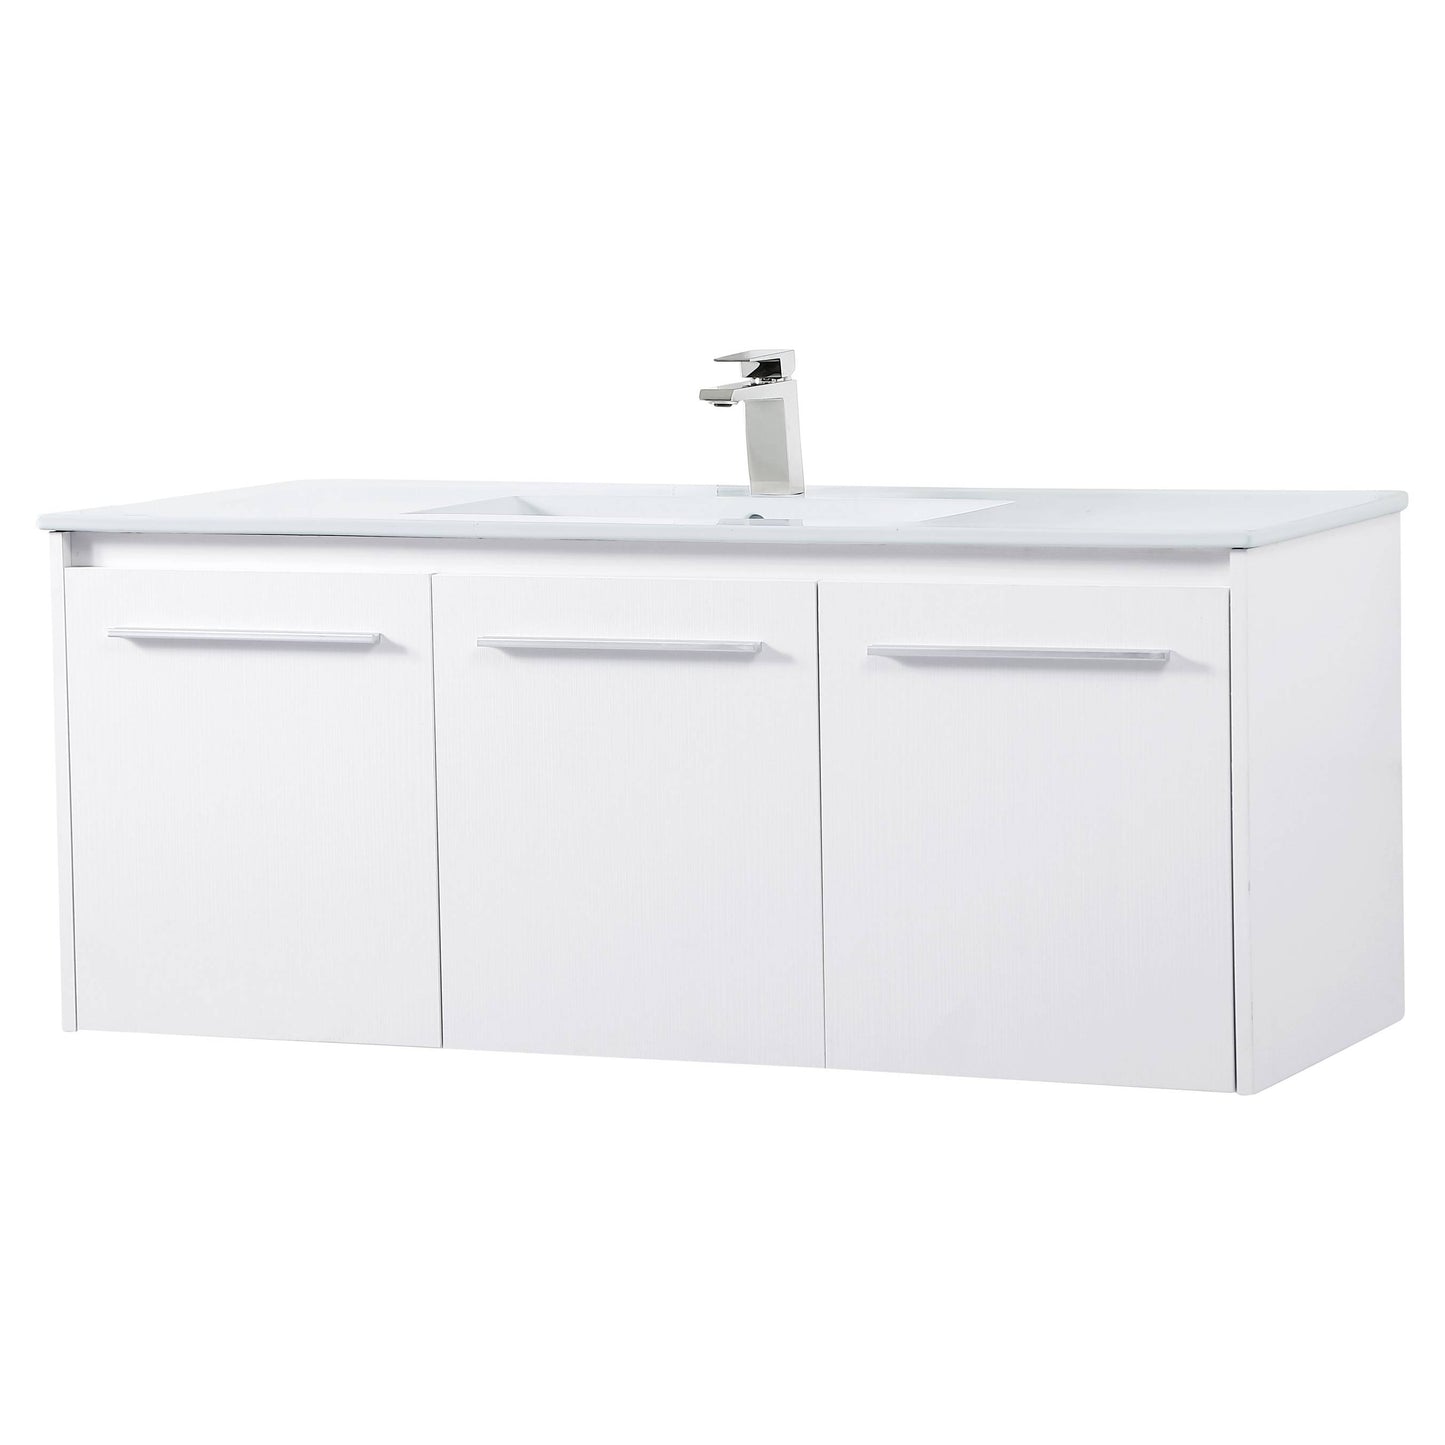 VF44040WH 40" Single Bathroom Floating Vanity in White